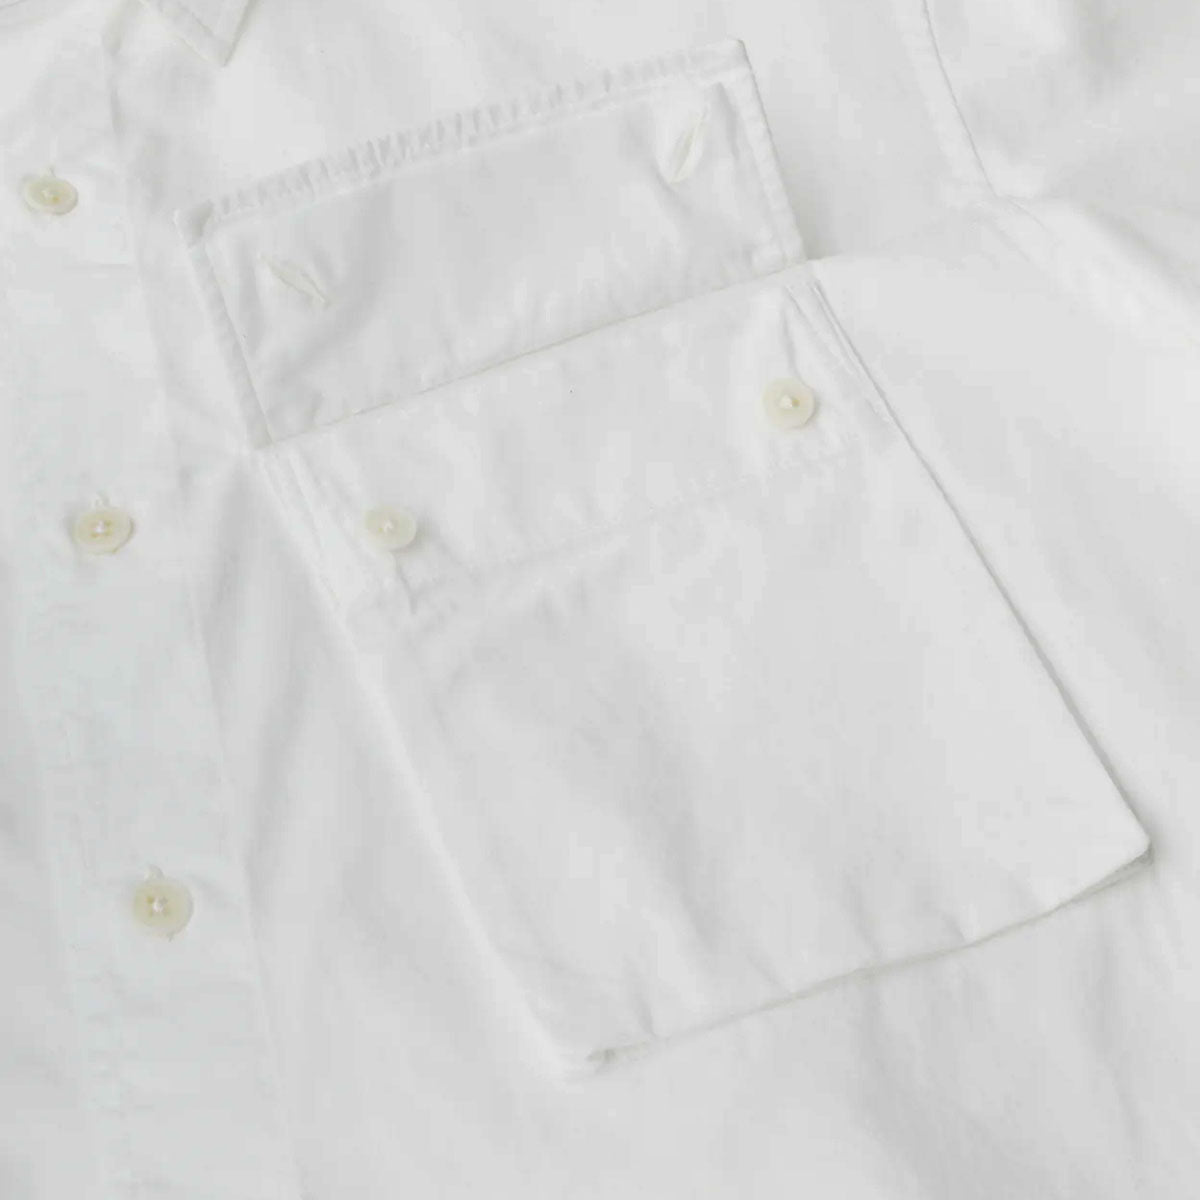 Scale White Short Sleeve Shirt Short Sleeve Belstaff   